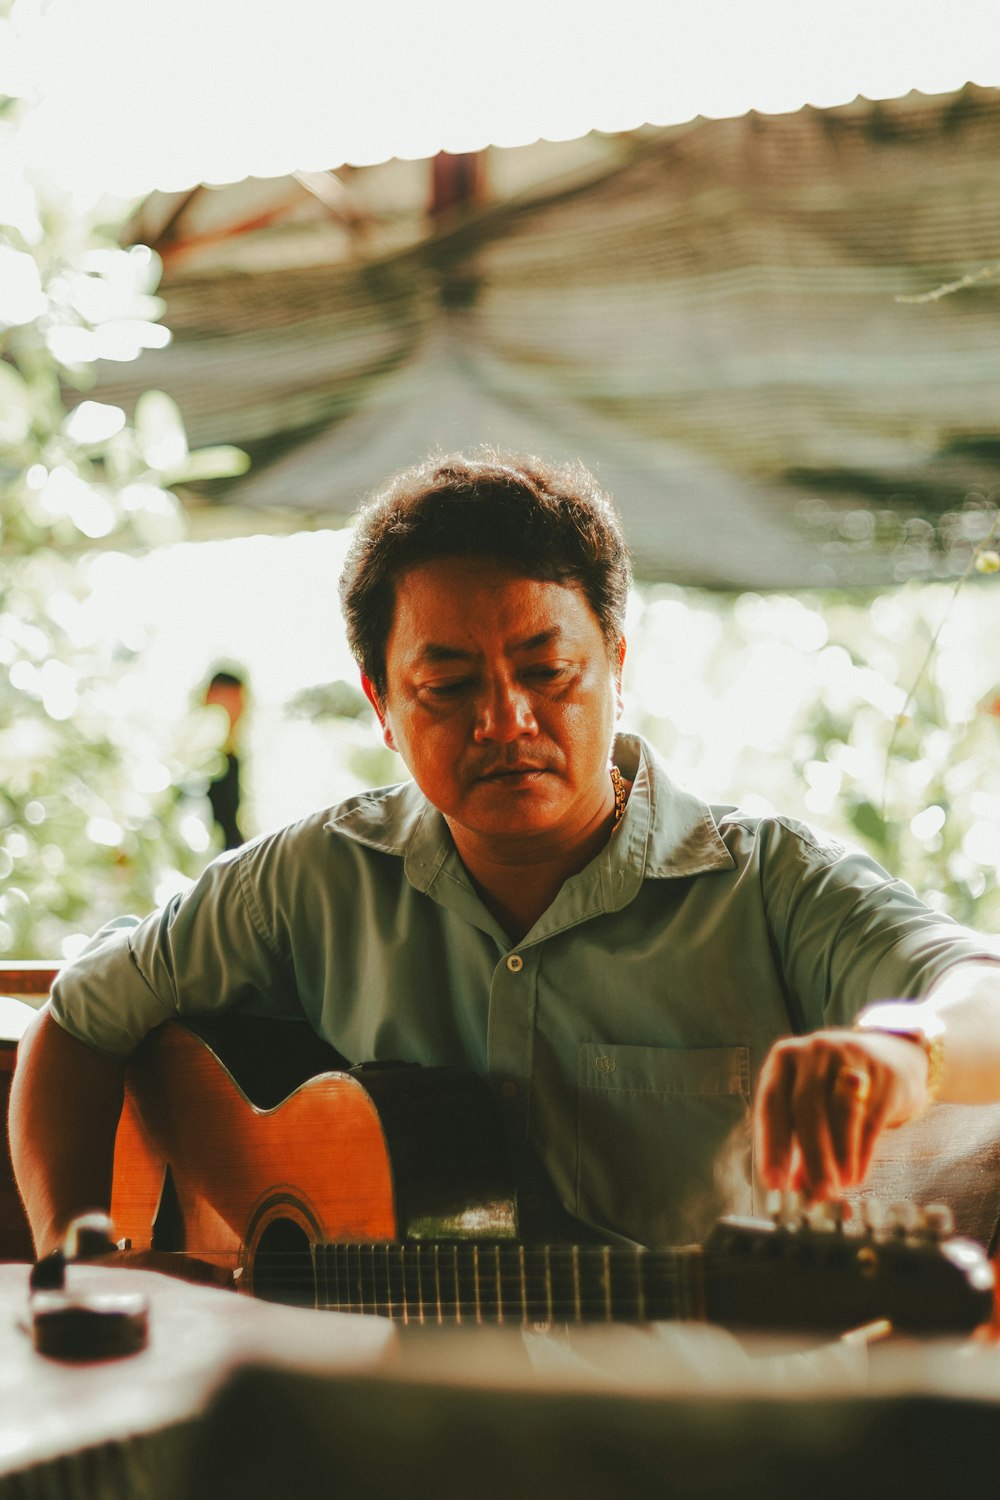 a man sitting down playing a guitar